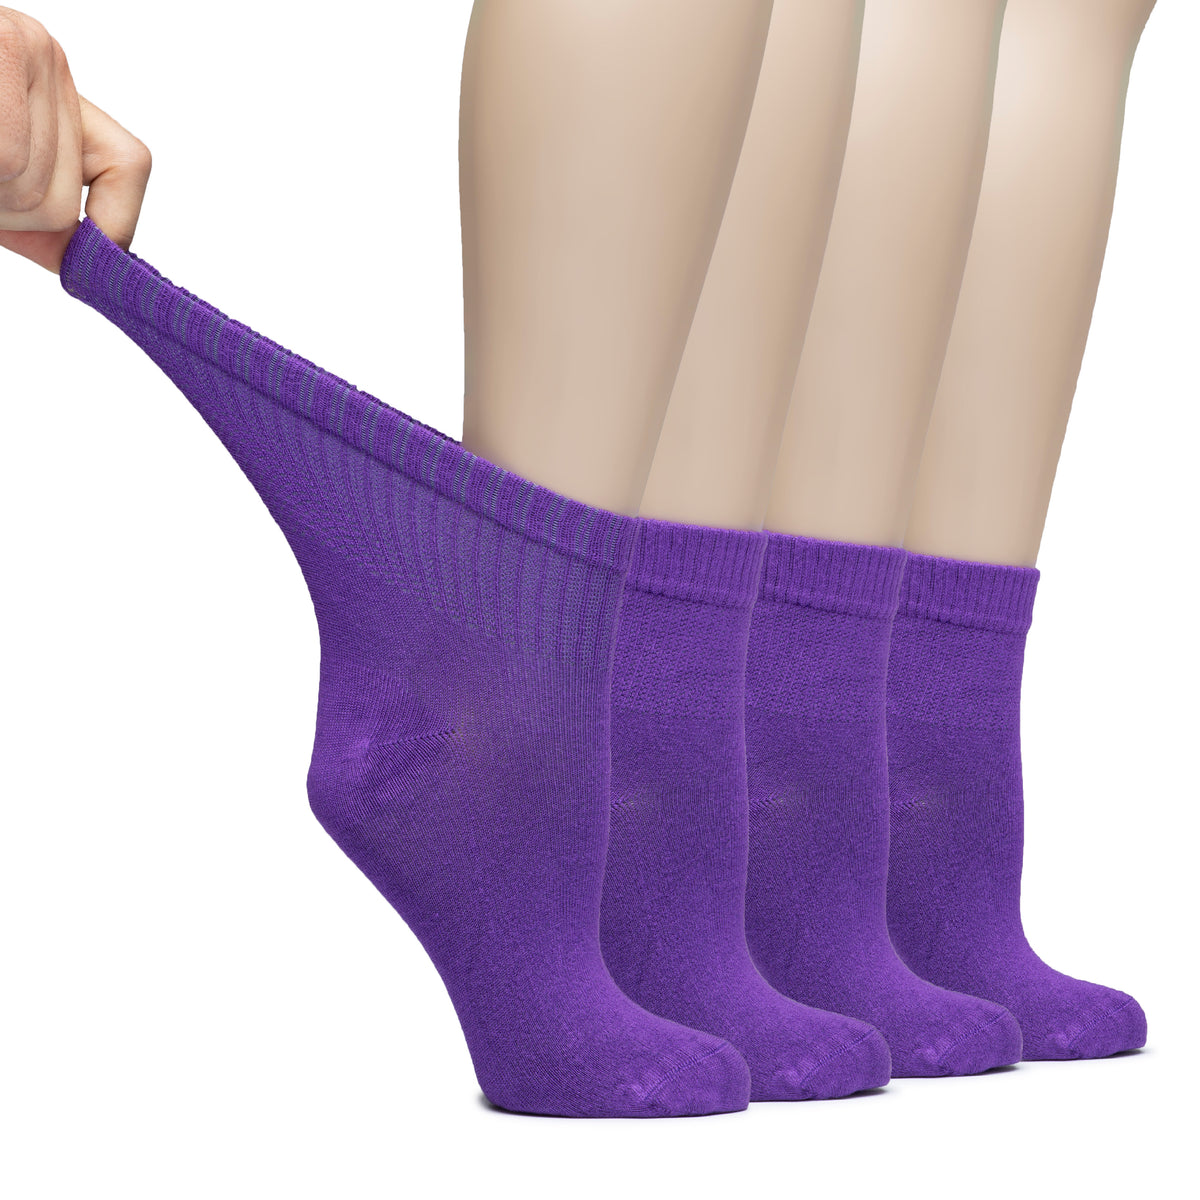 Hugh Ugoli Lightweight Women's Diabetic Ankle Socks Bamboo Thin Socks Seamless Toe and Non-Binding Top, 4 Pairs, , Shoe Size: 6-9/10-12 | Shoe Size: 10-12 | Purple